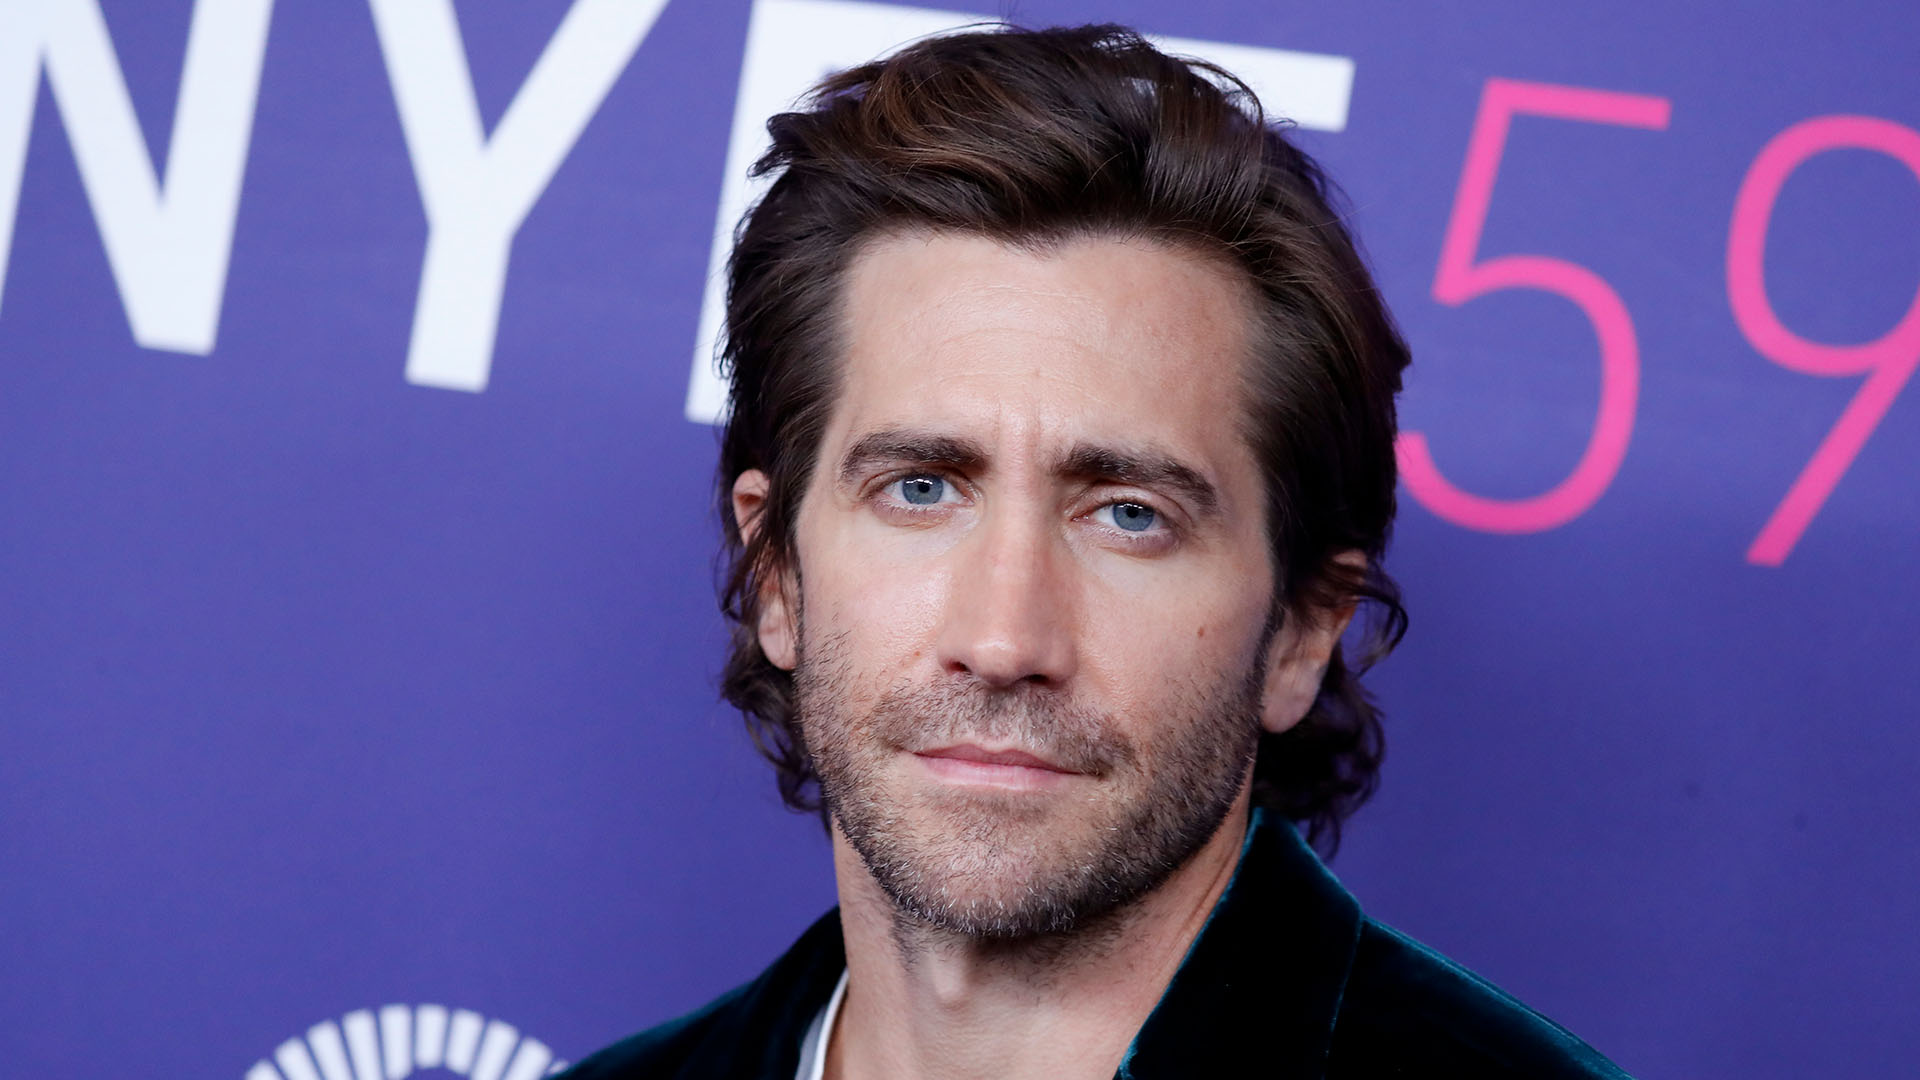 Jake Gyllenhaal: Mid-Length Swept Back Hairstyle | Man For Himself